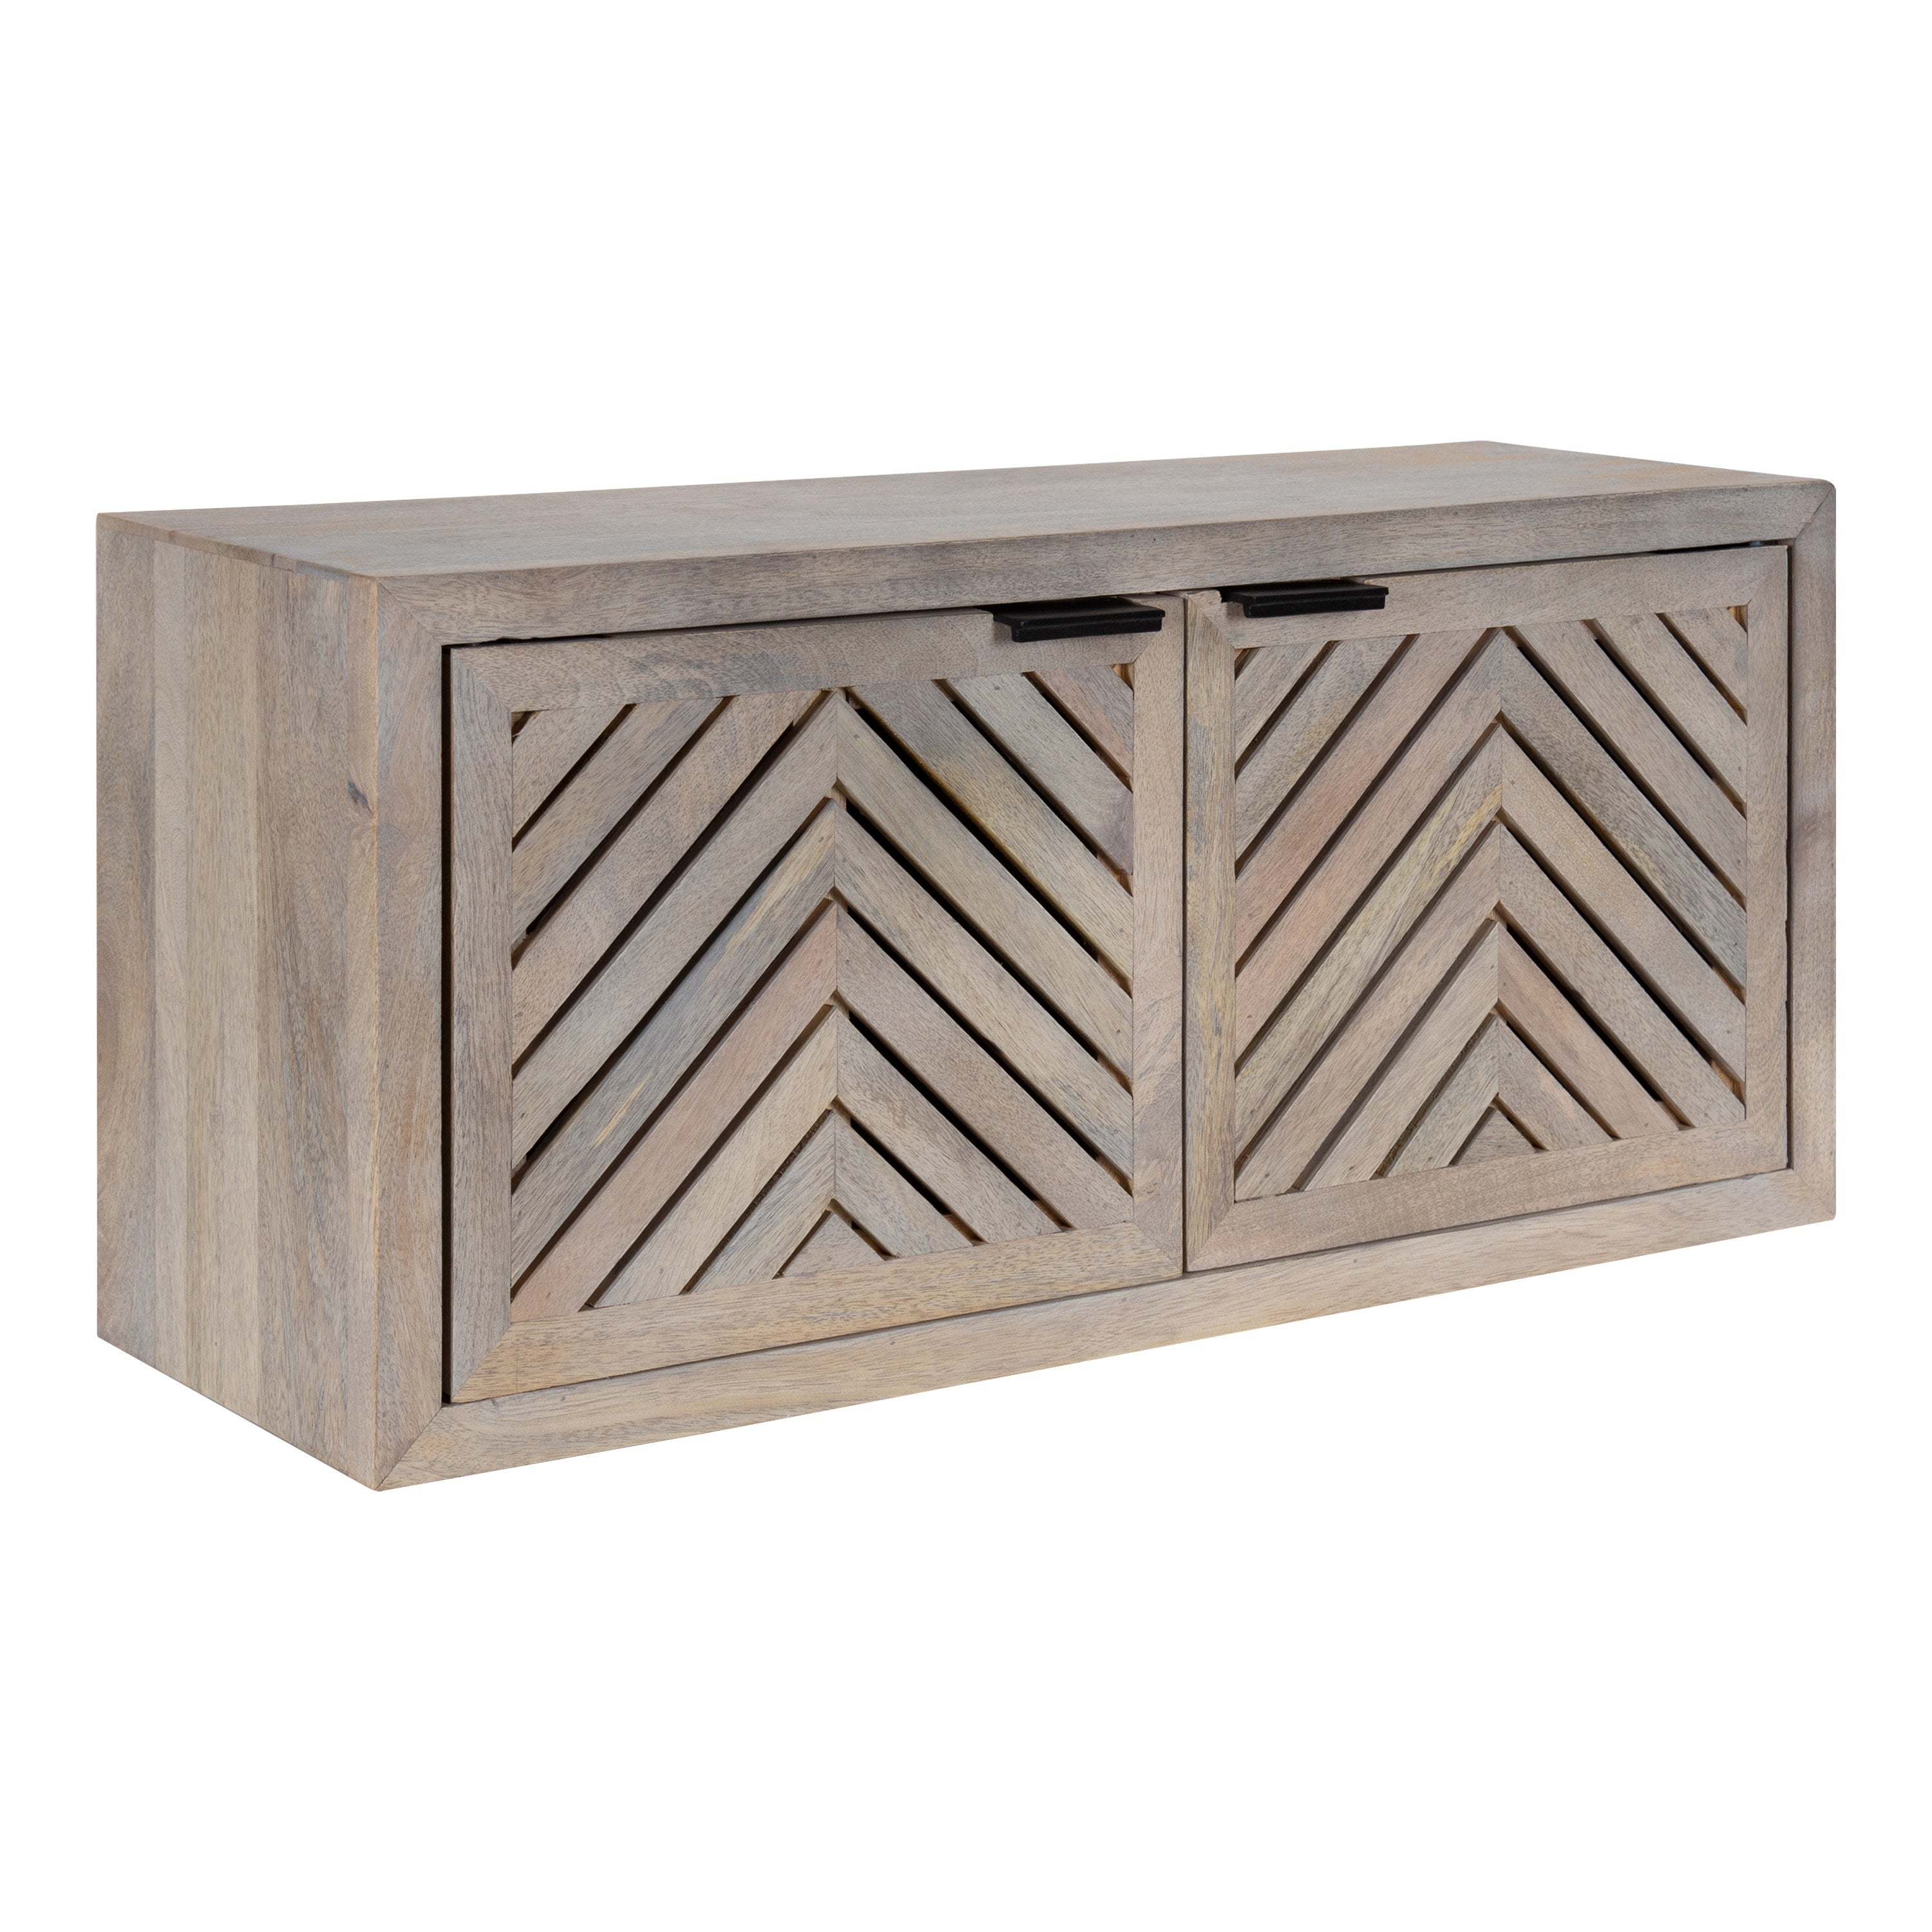 Mezzeta Decorative Wood Wall Cabinet